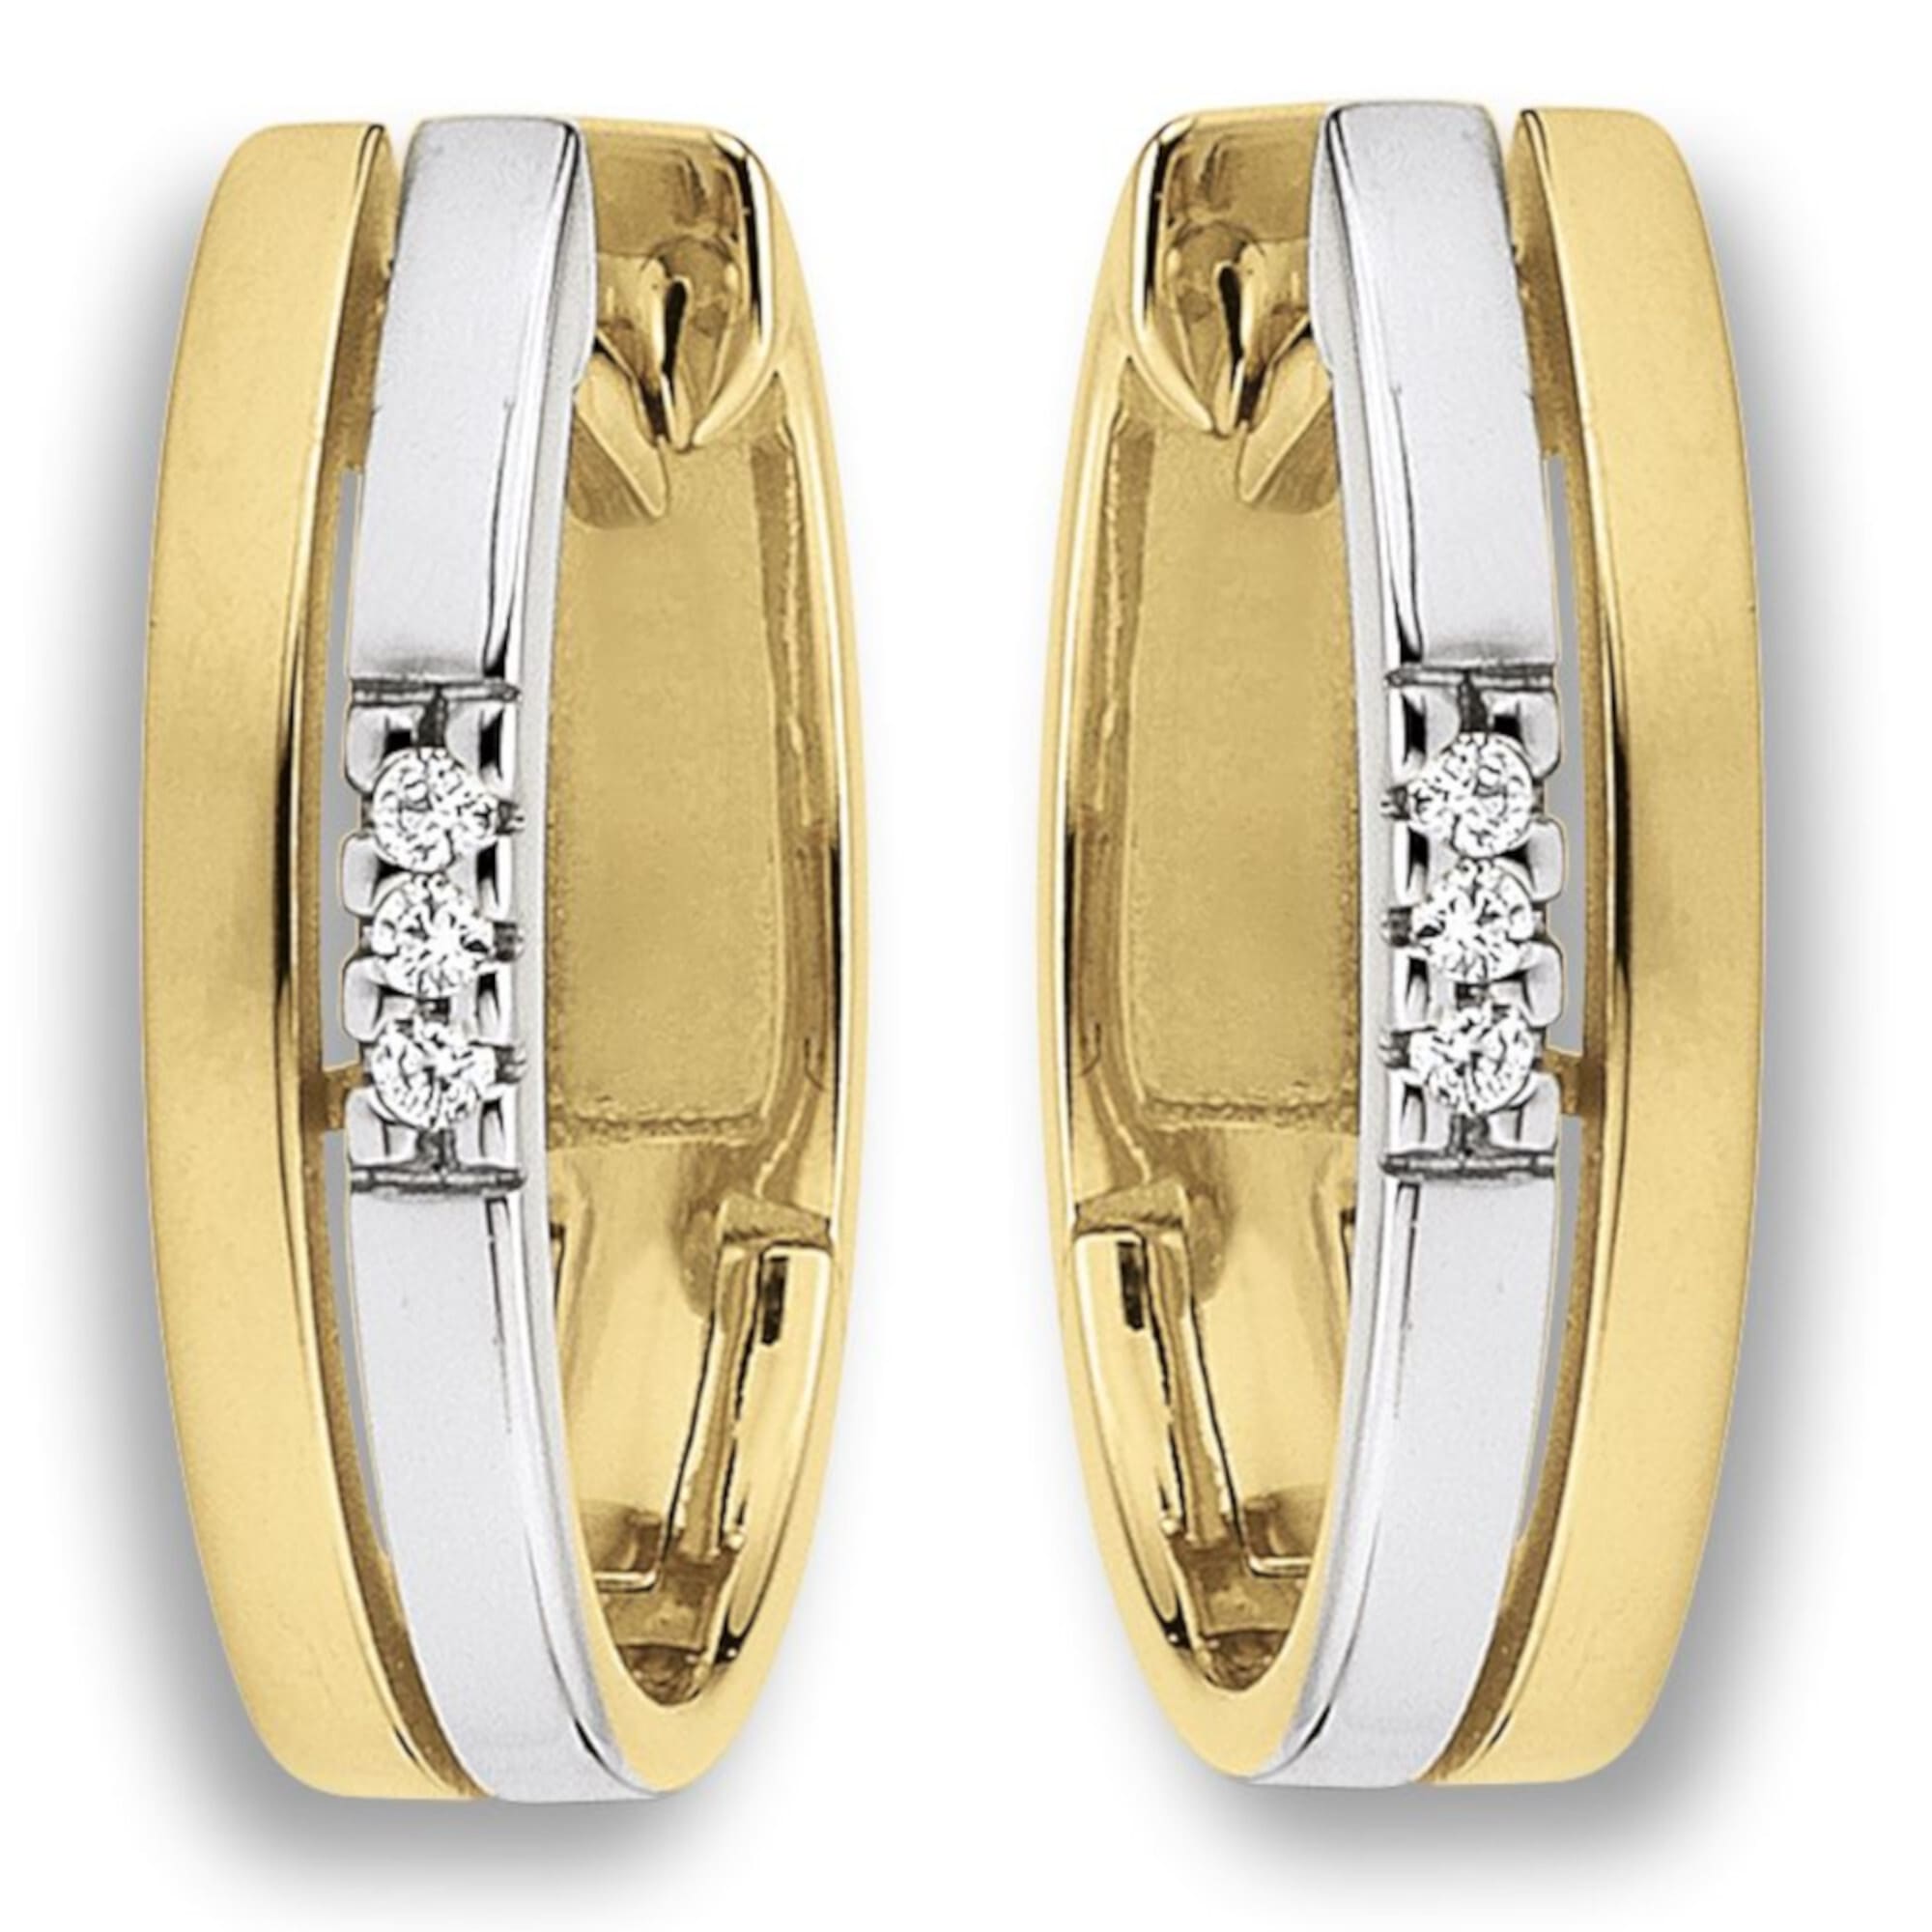 Paar Creolen »0.03 ct Diamant Brillant Ohrringe Creolen aus 585 Gelbgold«, Damen Gold...